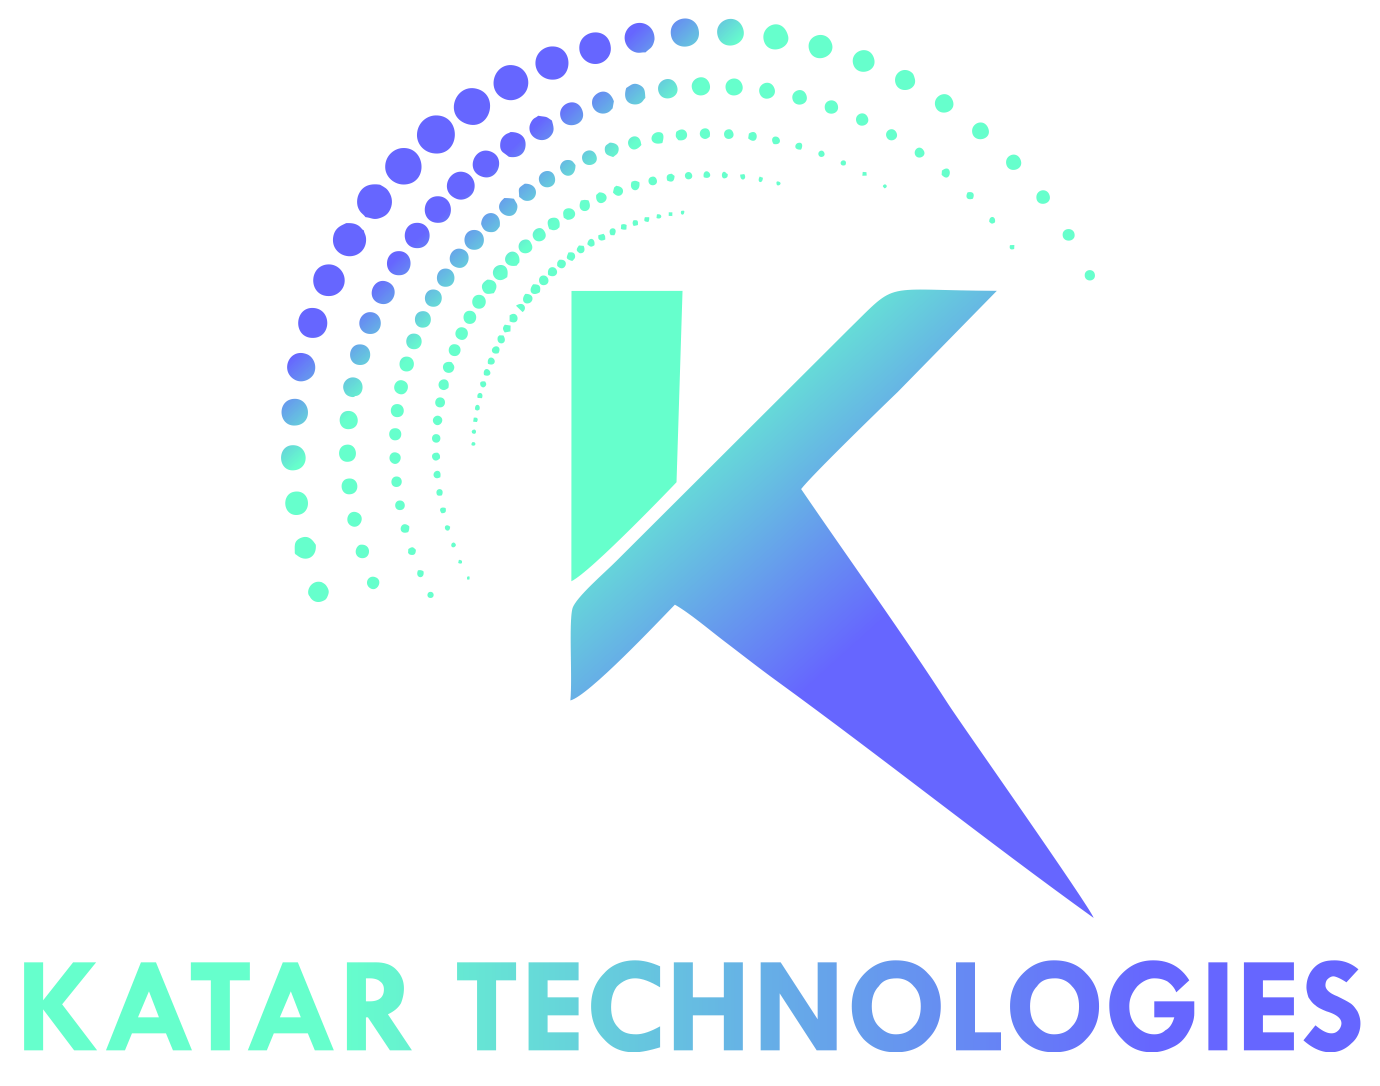 Katar Technologies